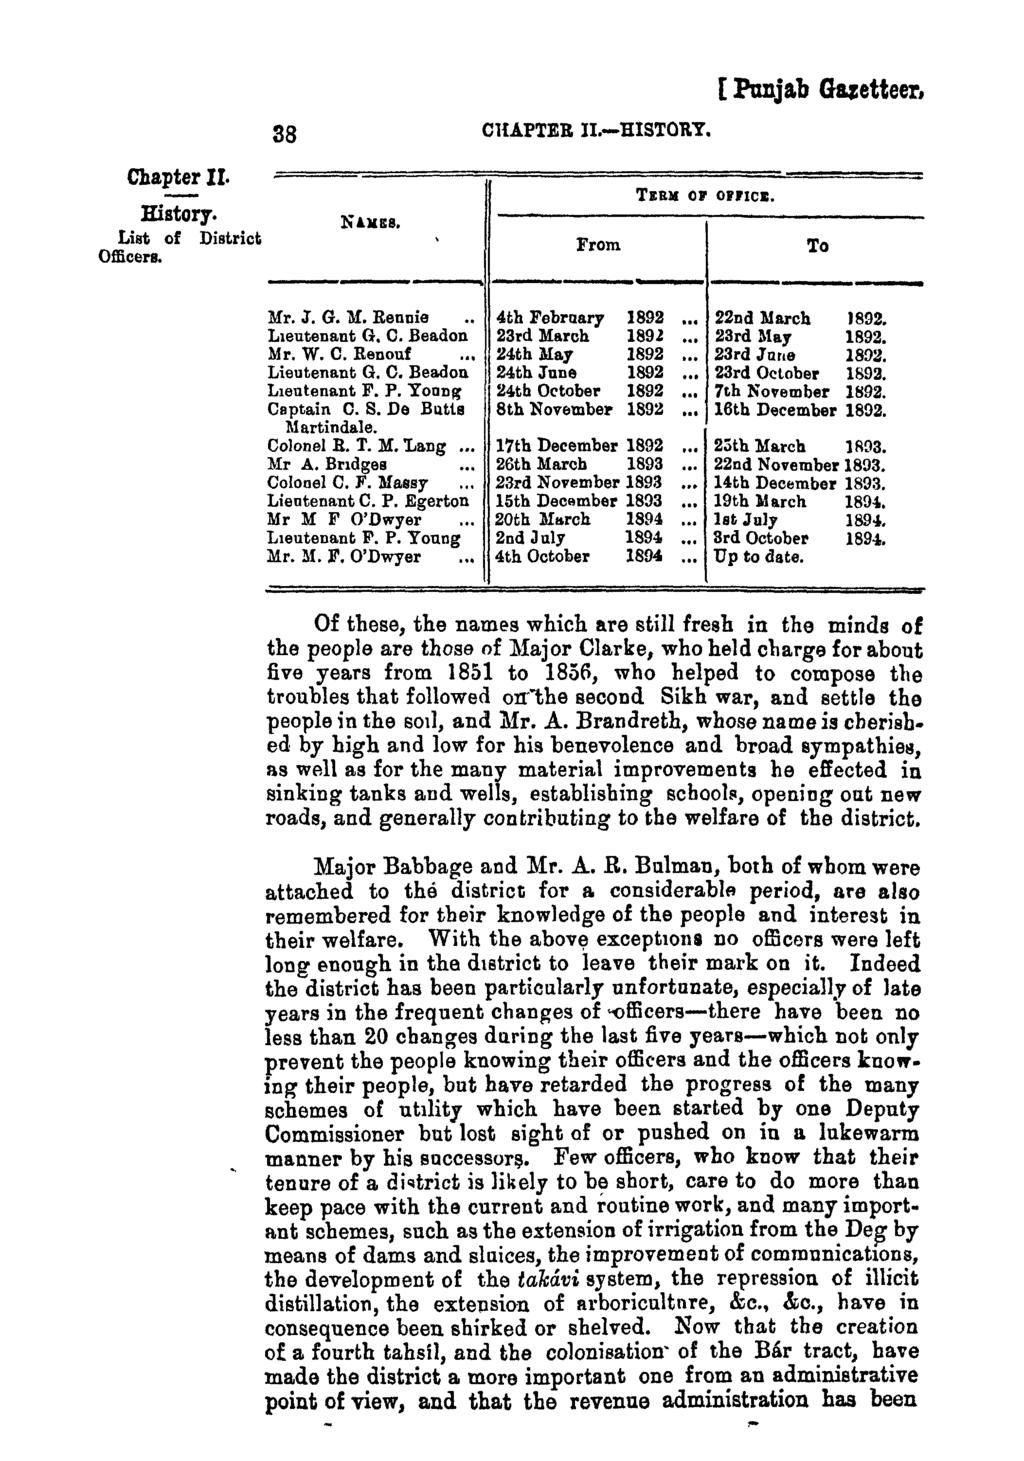 Chapter II. History. List of District Officers. 38 Nuus. CHAPTER n.-history. I Punja.b Gazetteer, TERM OJ' OUICE. From To Mr. J. G. M. Rennie.. LIeutenant G. O. Beadon Mr. W. O. Renouf Lieutenant G.